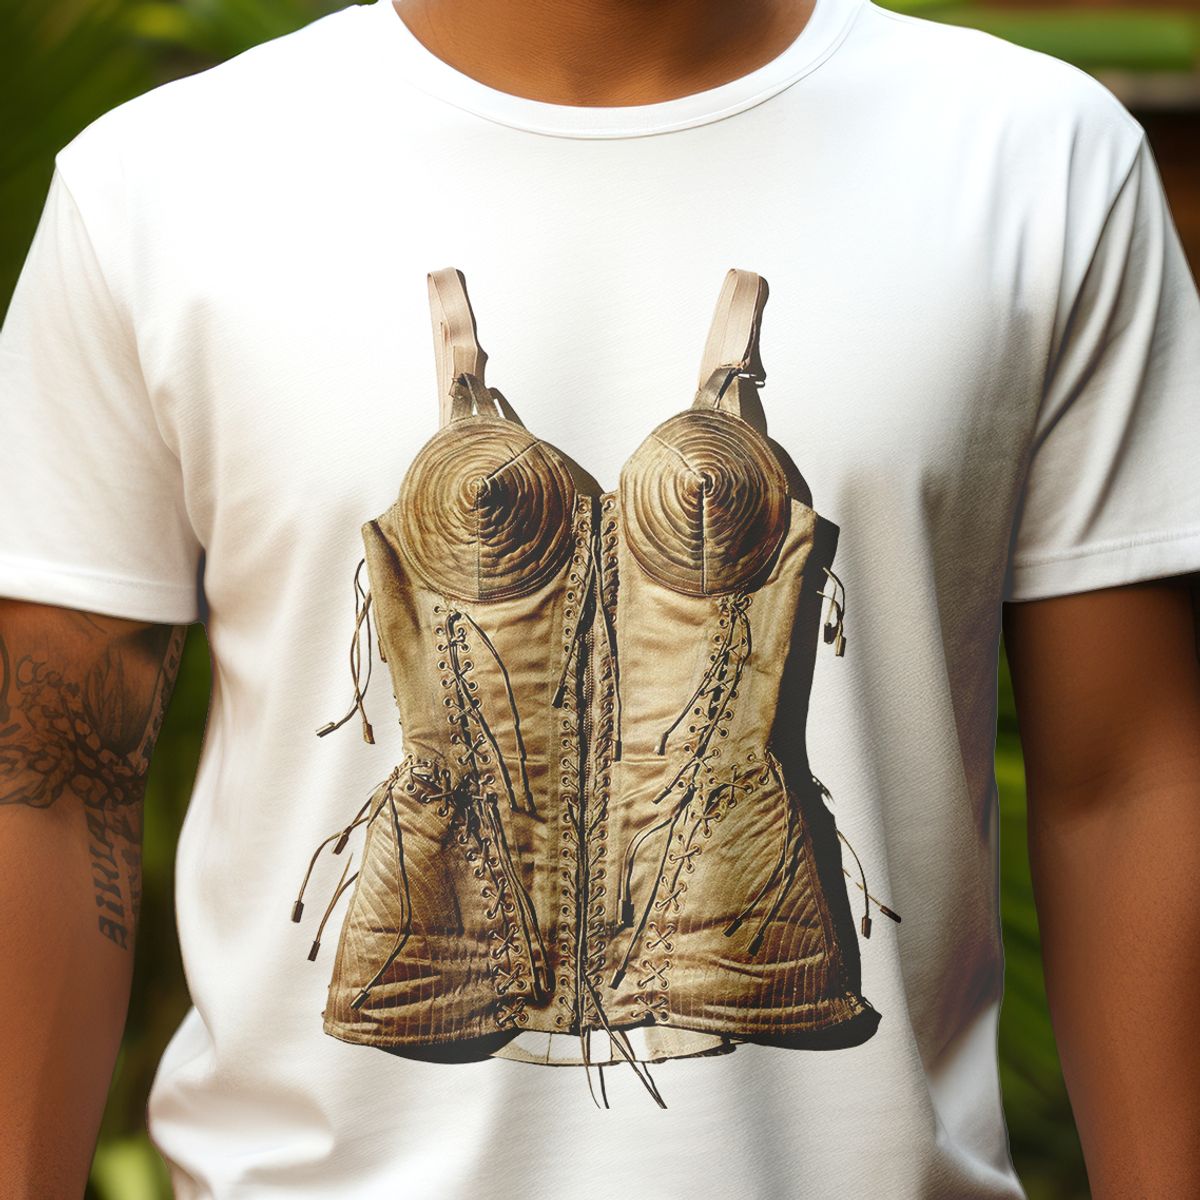 Nome do produto: Camiseta corset Jean Paul Gaultier (Genérica Version)